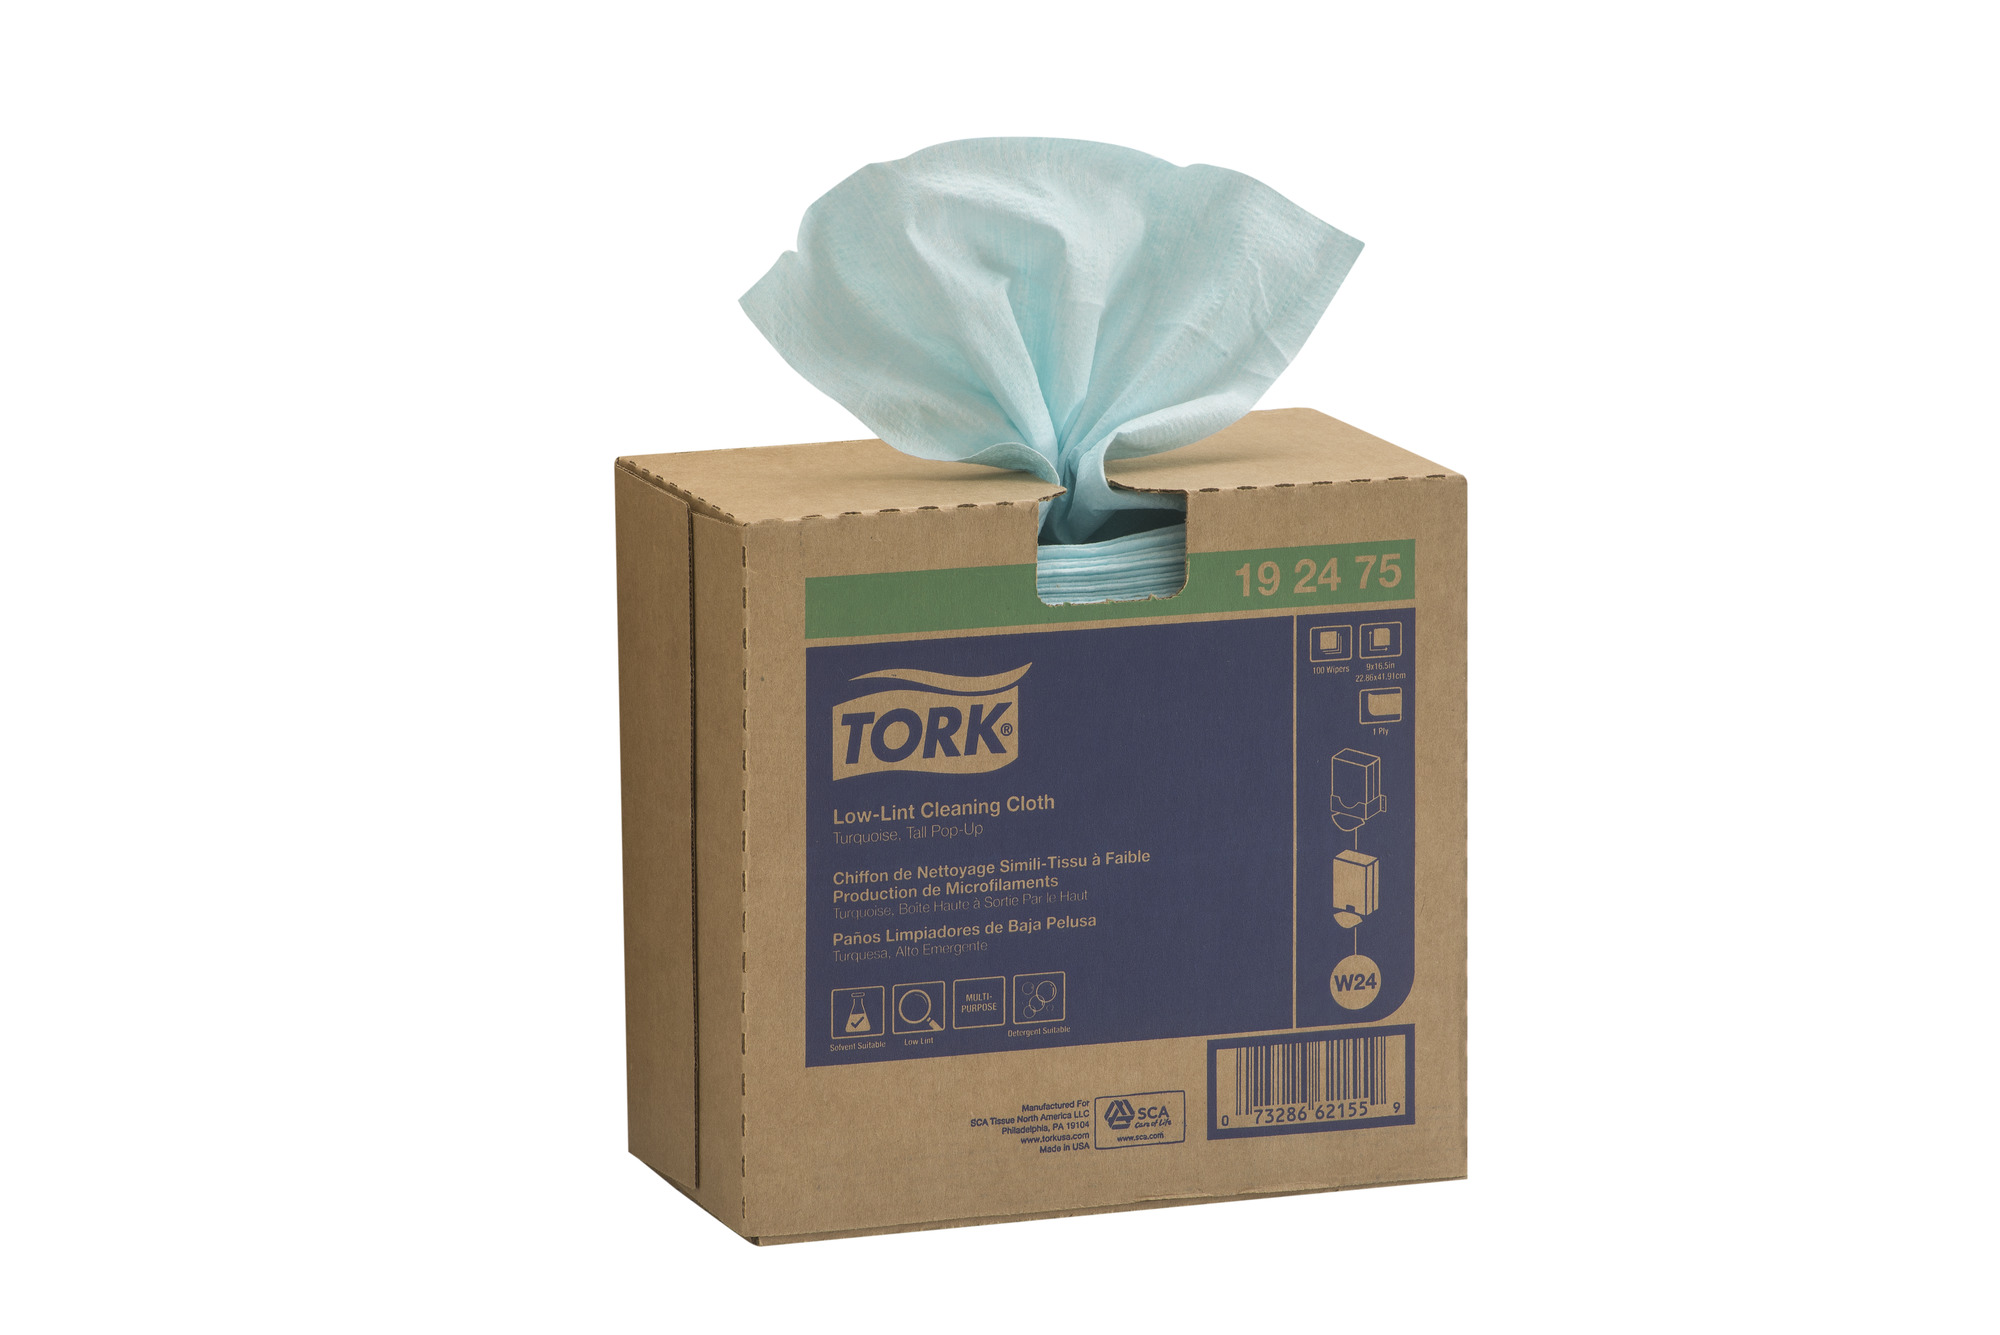 Tork Low-Lint Cleaning Cloth,
pop-up box 100/bx,  8 bx/cs